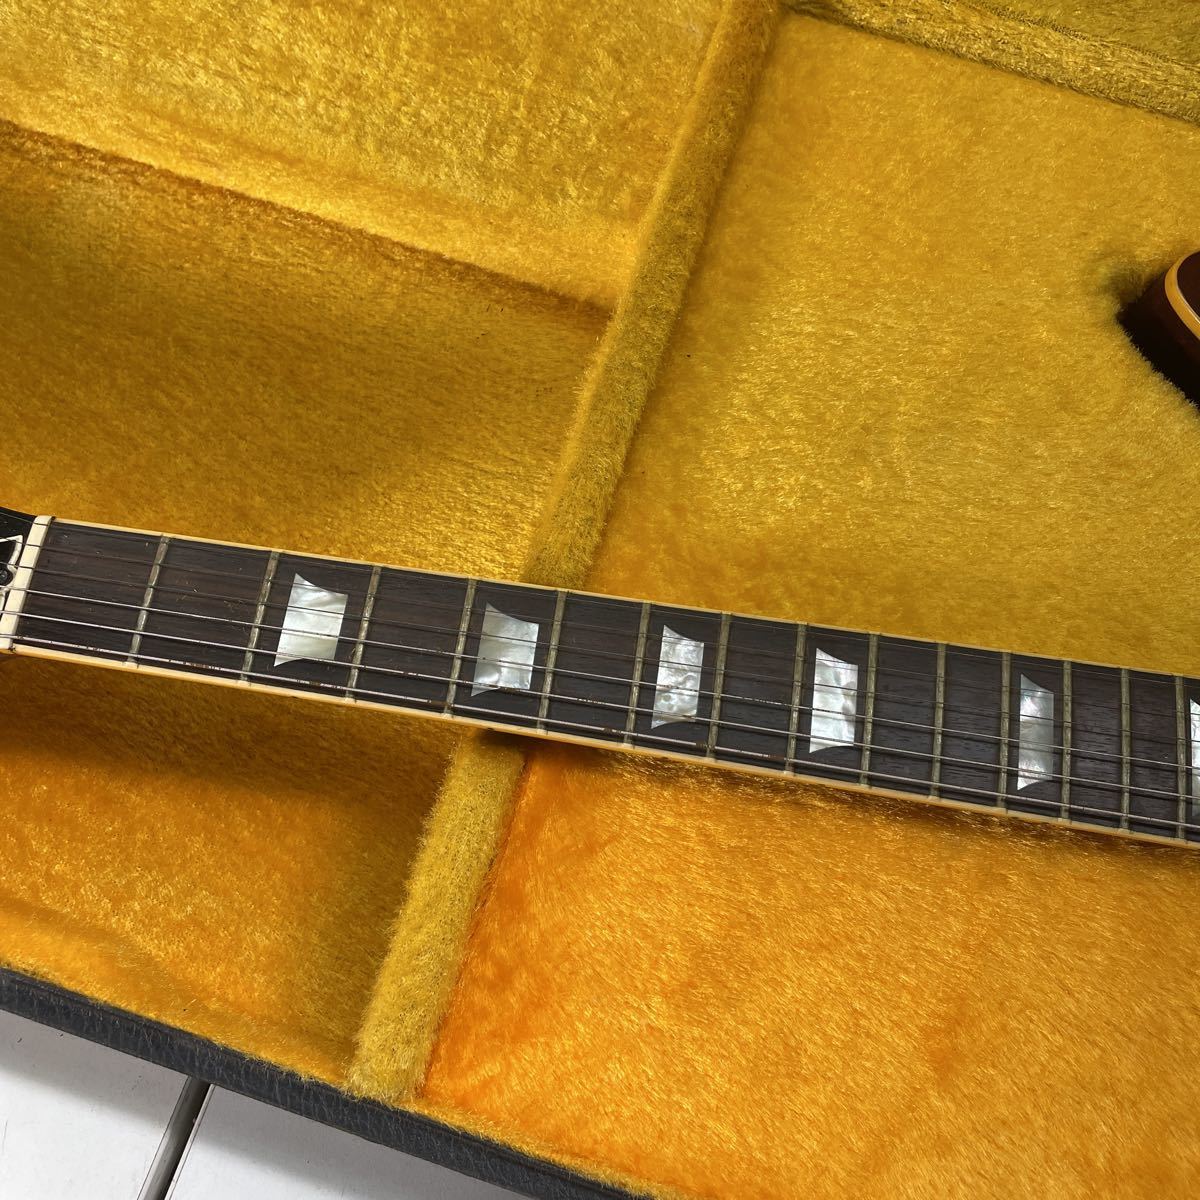 K0506-3 Aria Pro2 アリア プロ2 エレキギター ハードケース付き